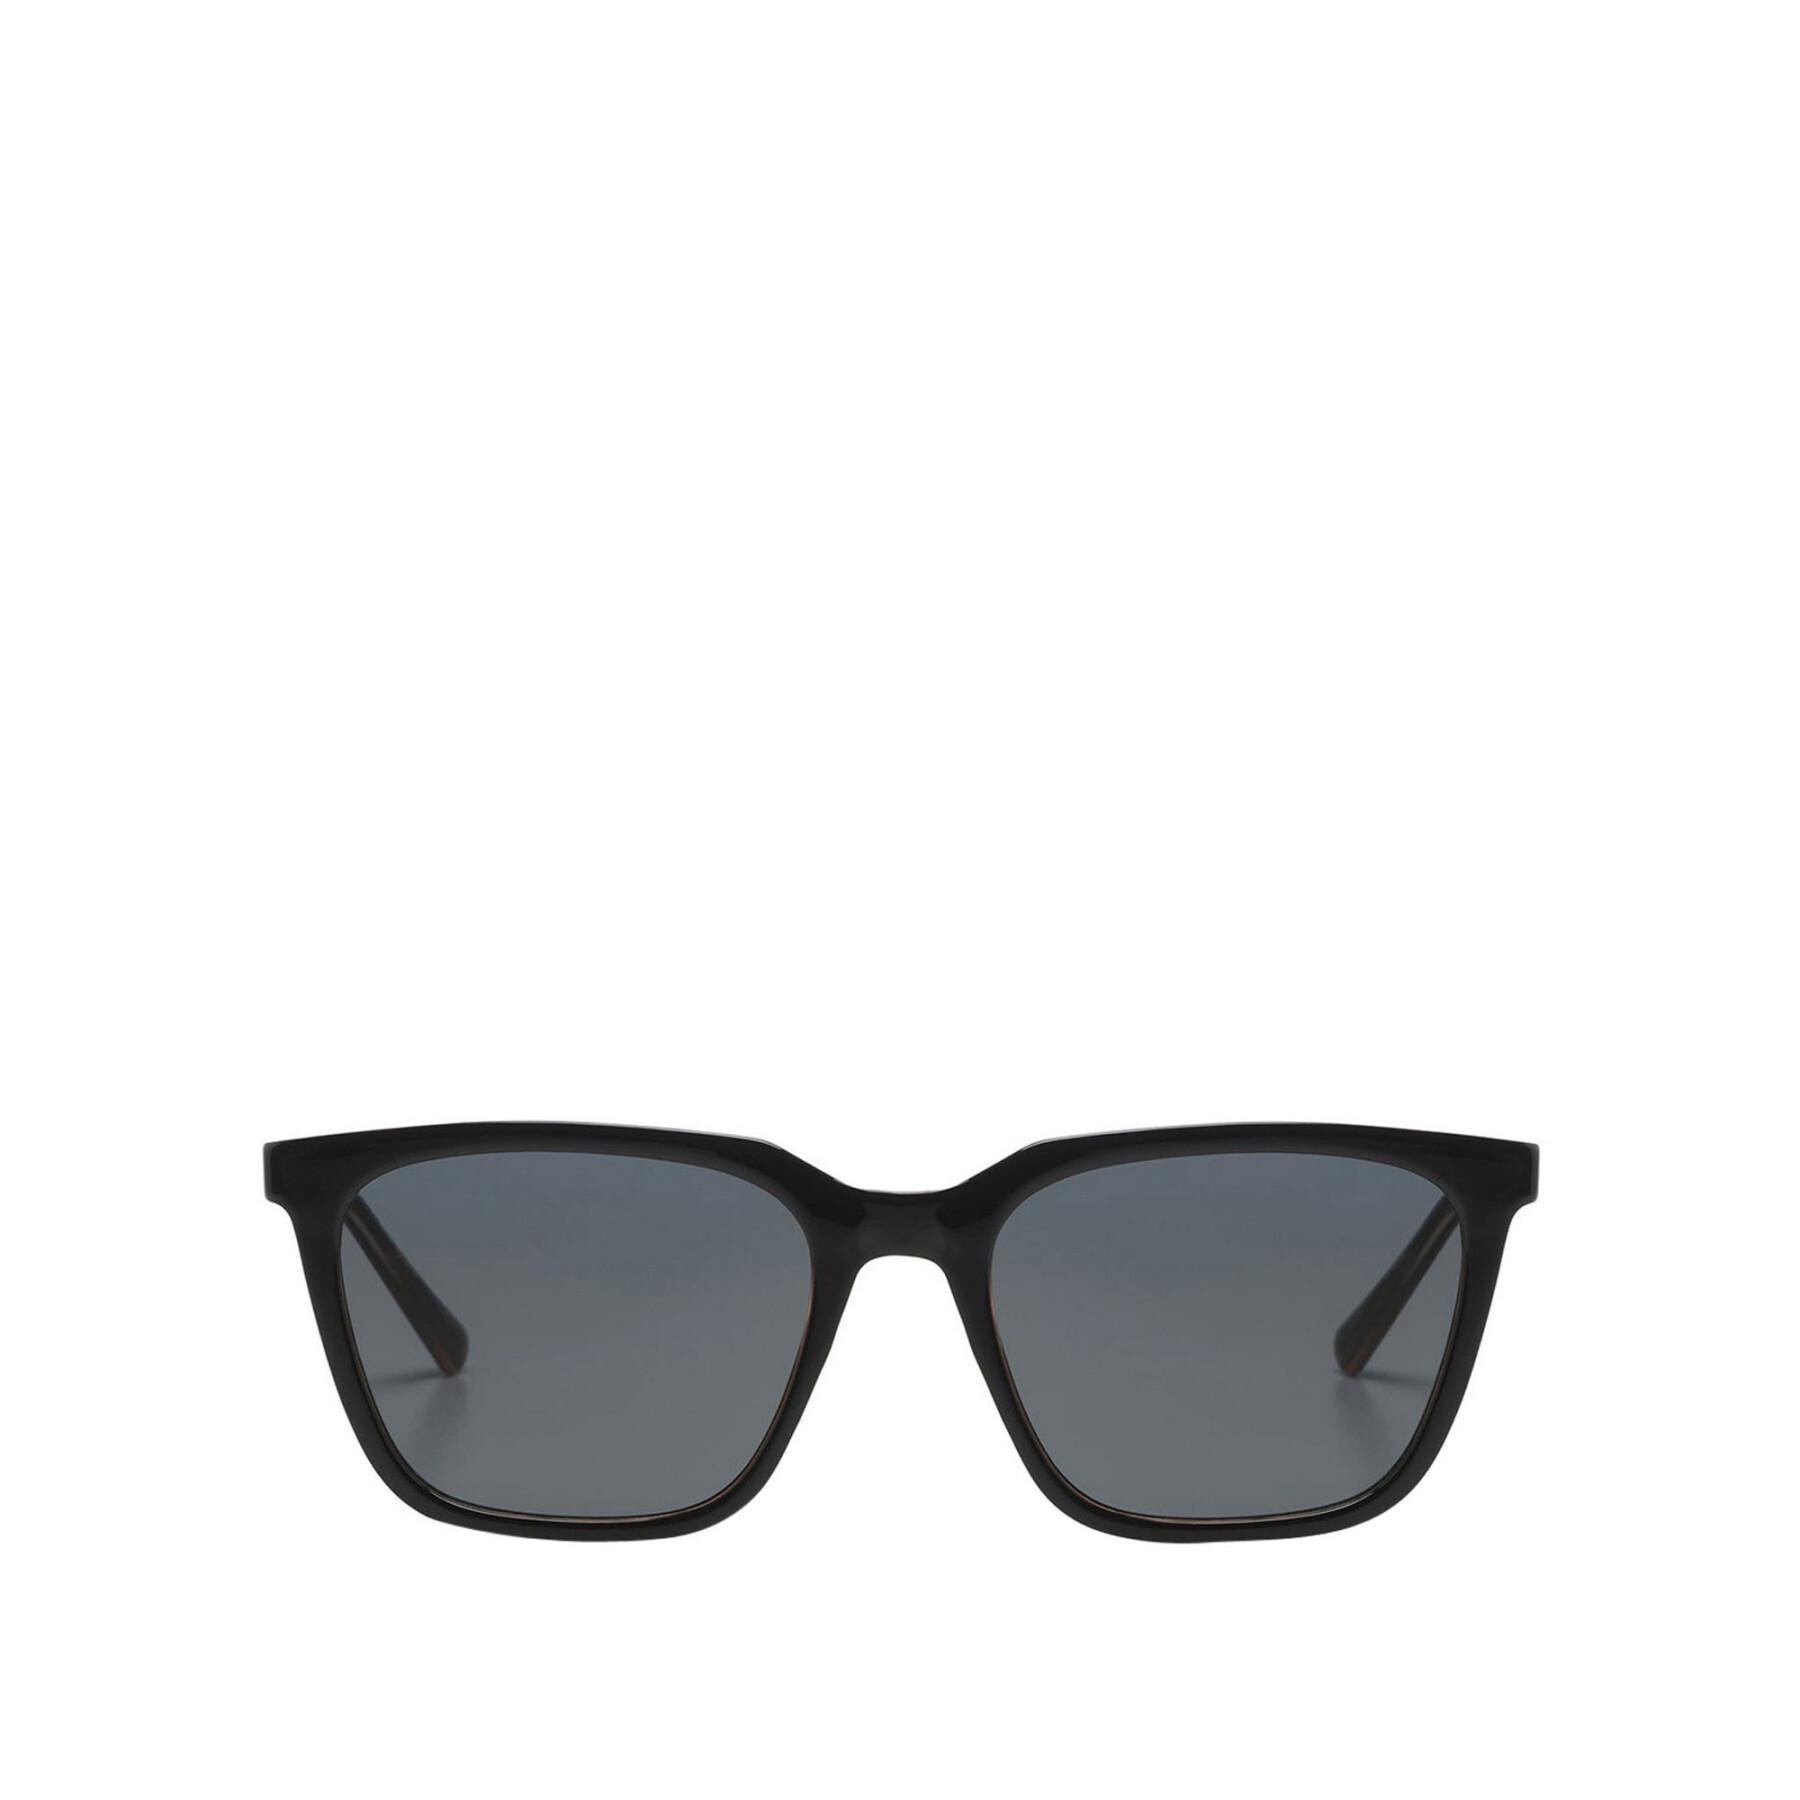 Sunglasses Komono Jay